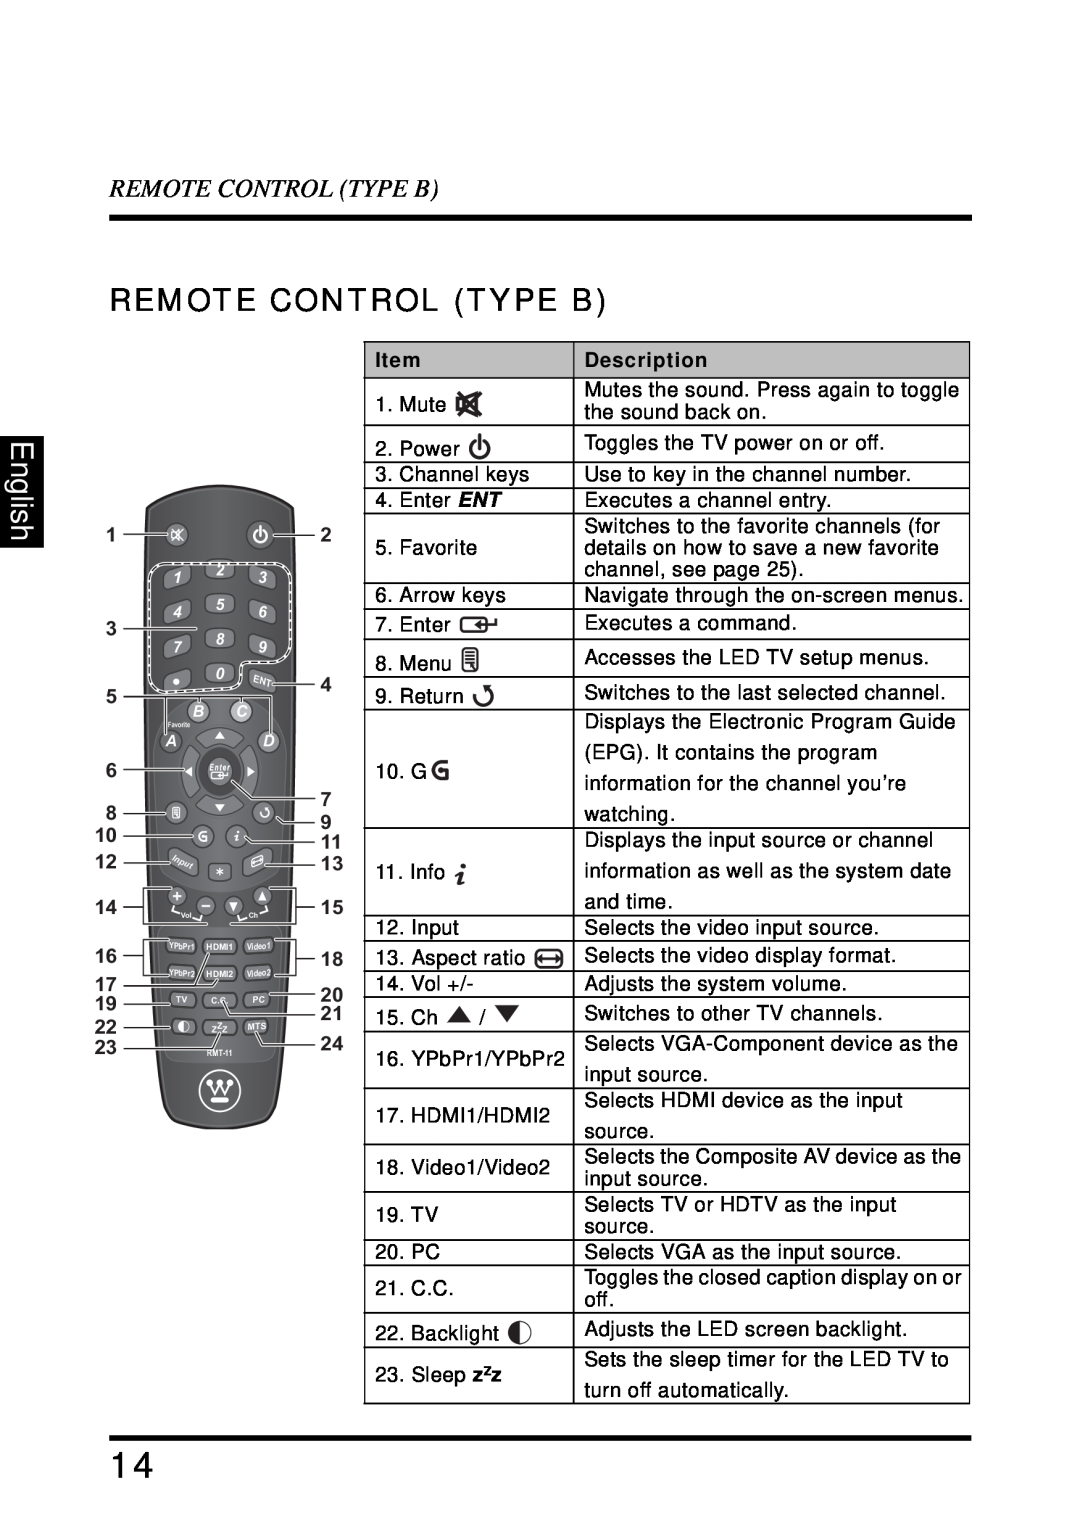 Westinghouse LD-4680 user manual Remote Control Type B, English, Description 